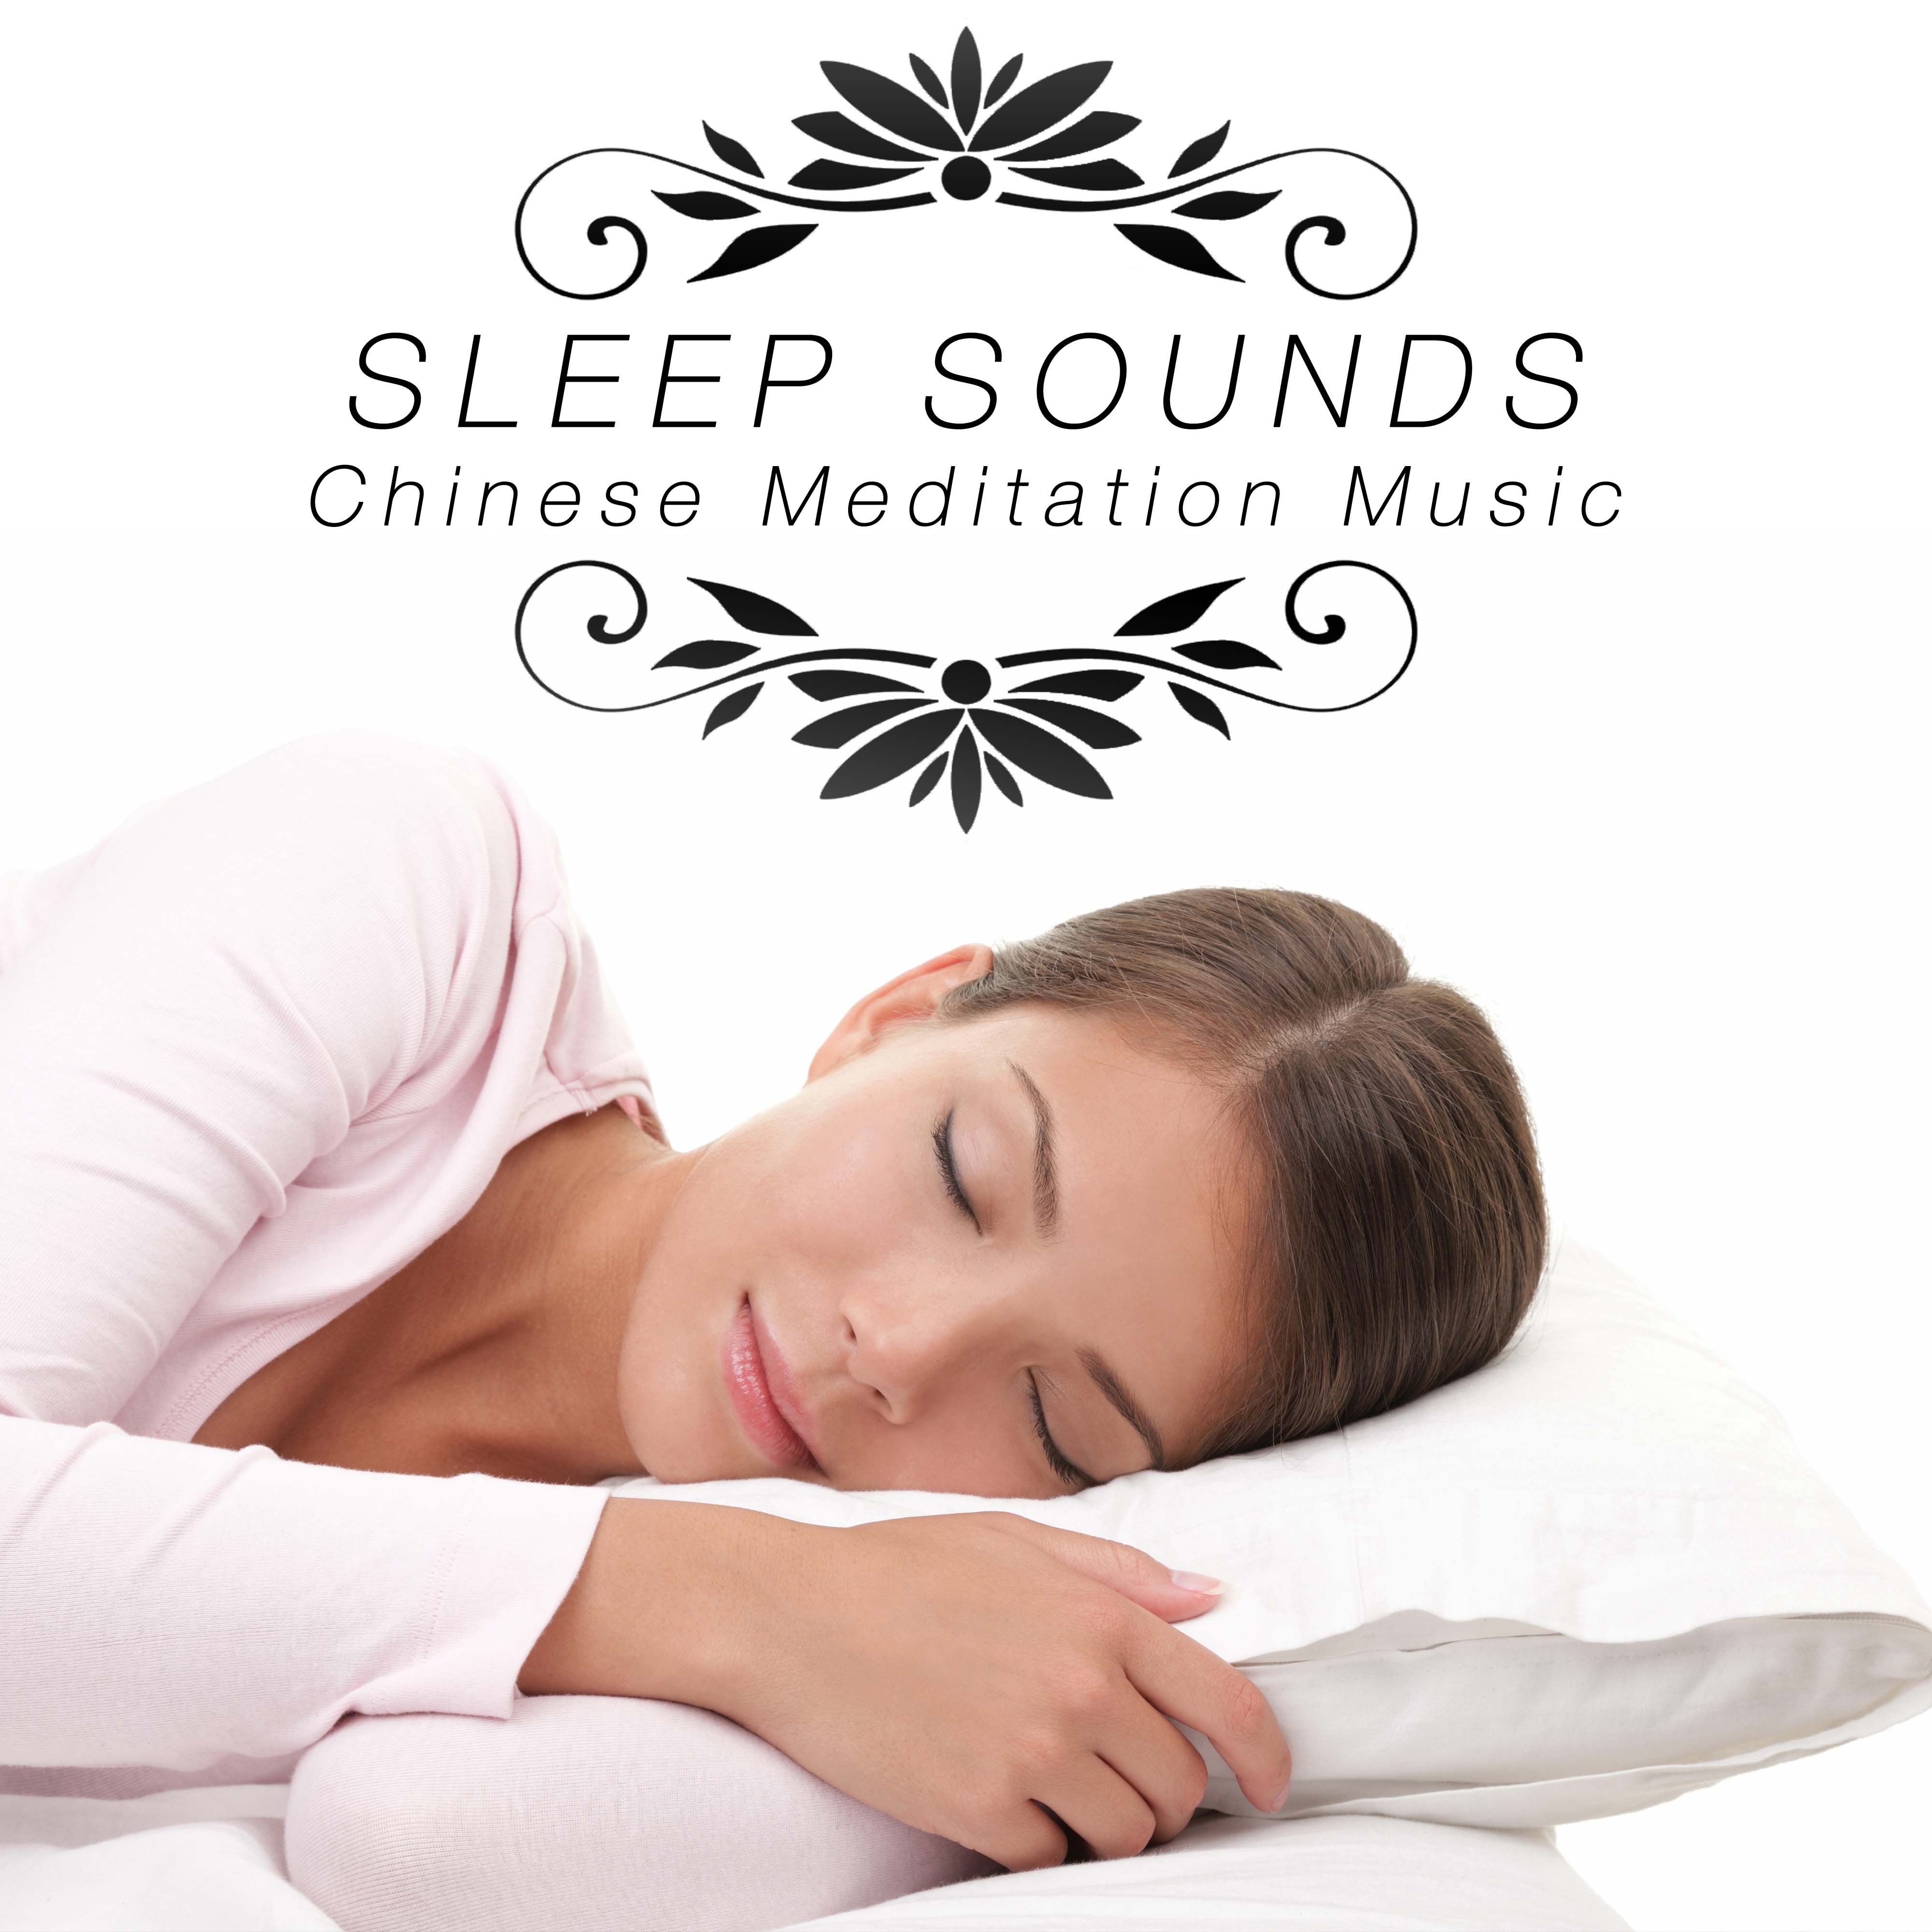 Sleep Sounds: Soothing Music for Sleep & Chinese Meditation Music